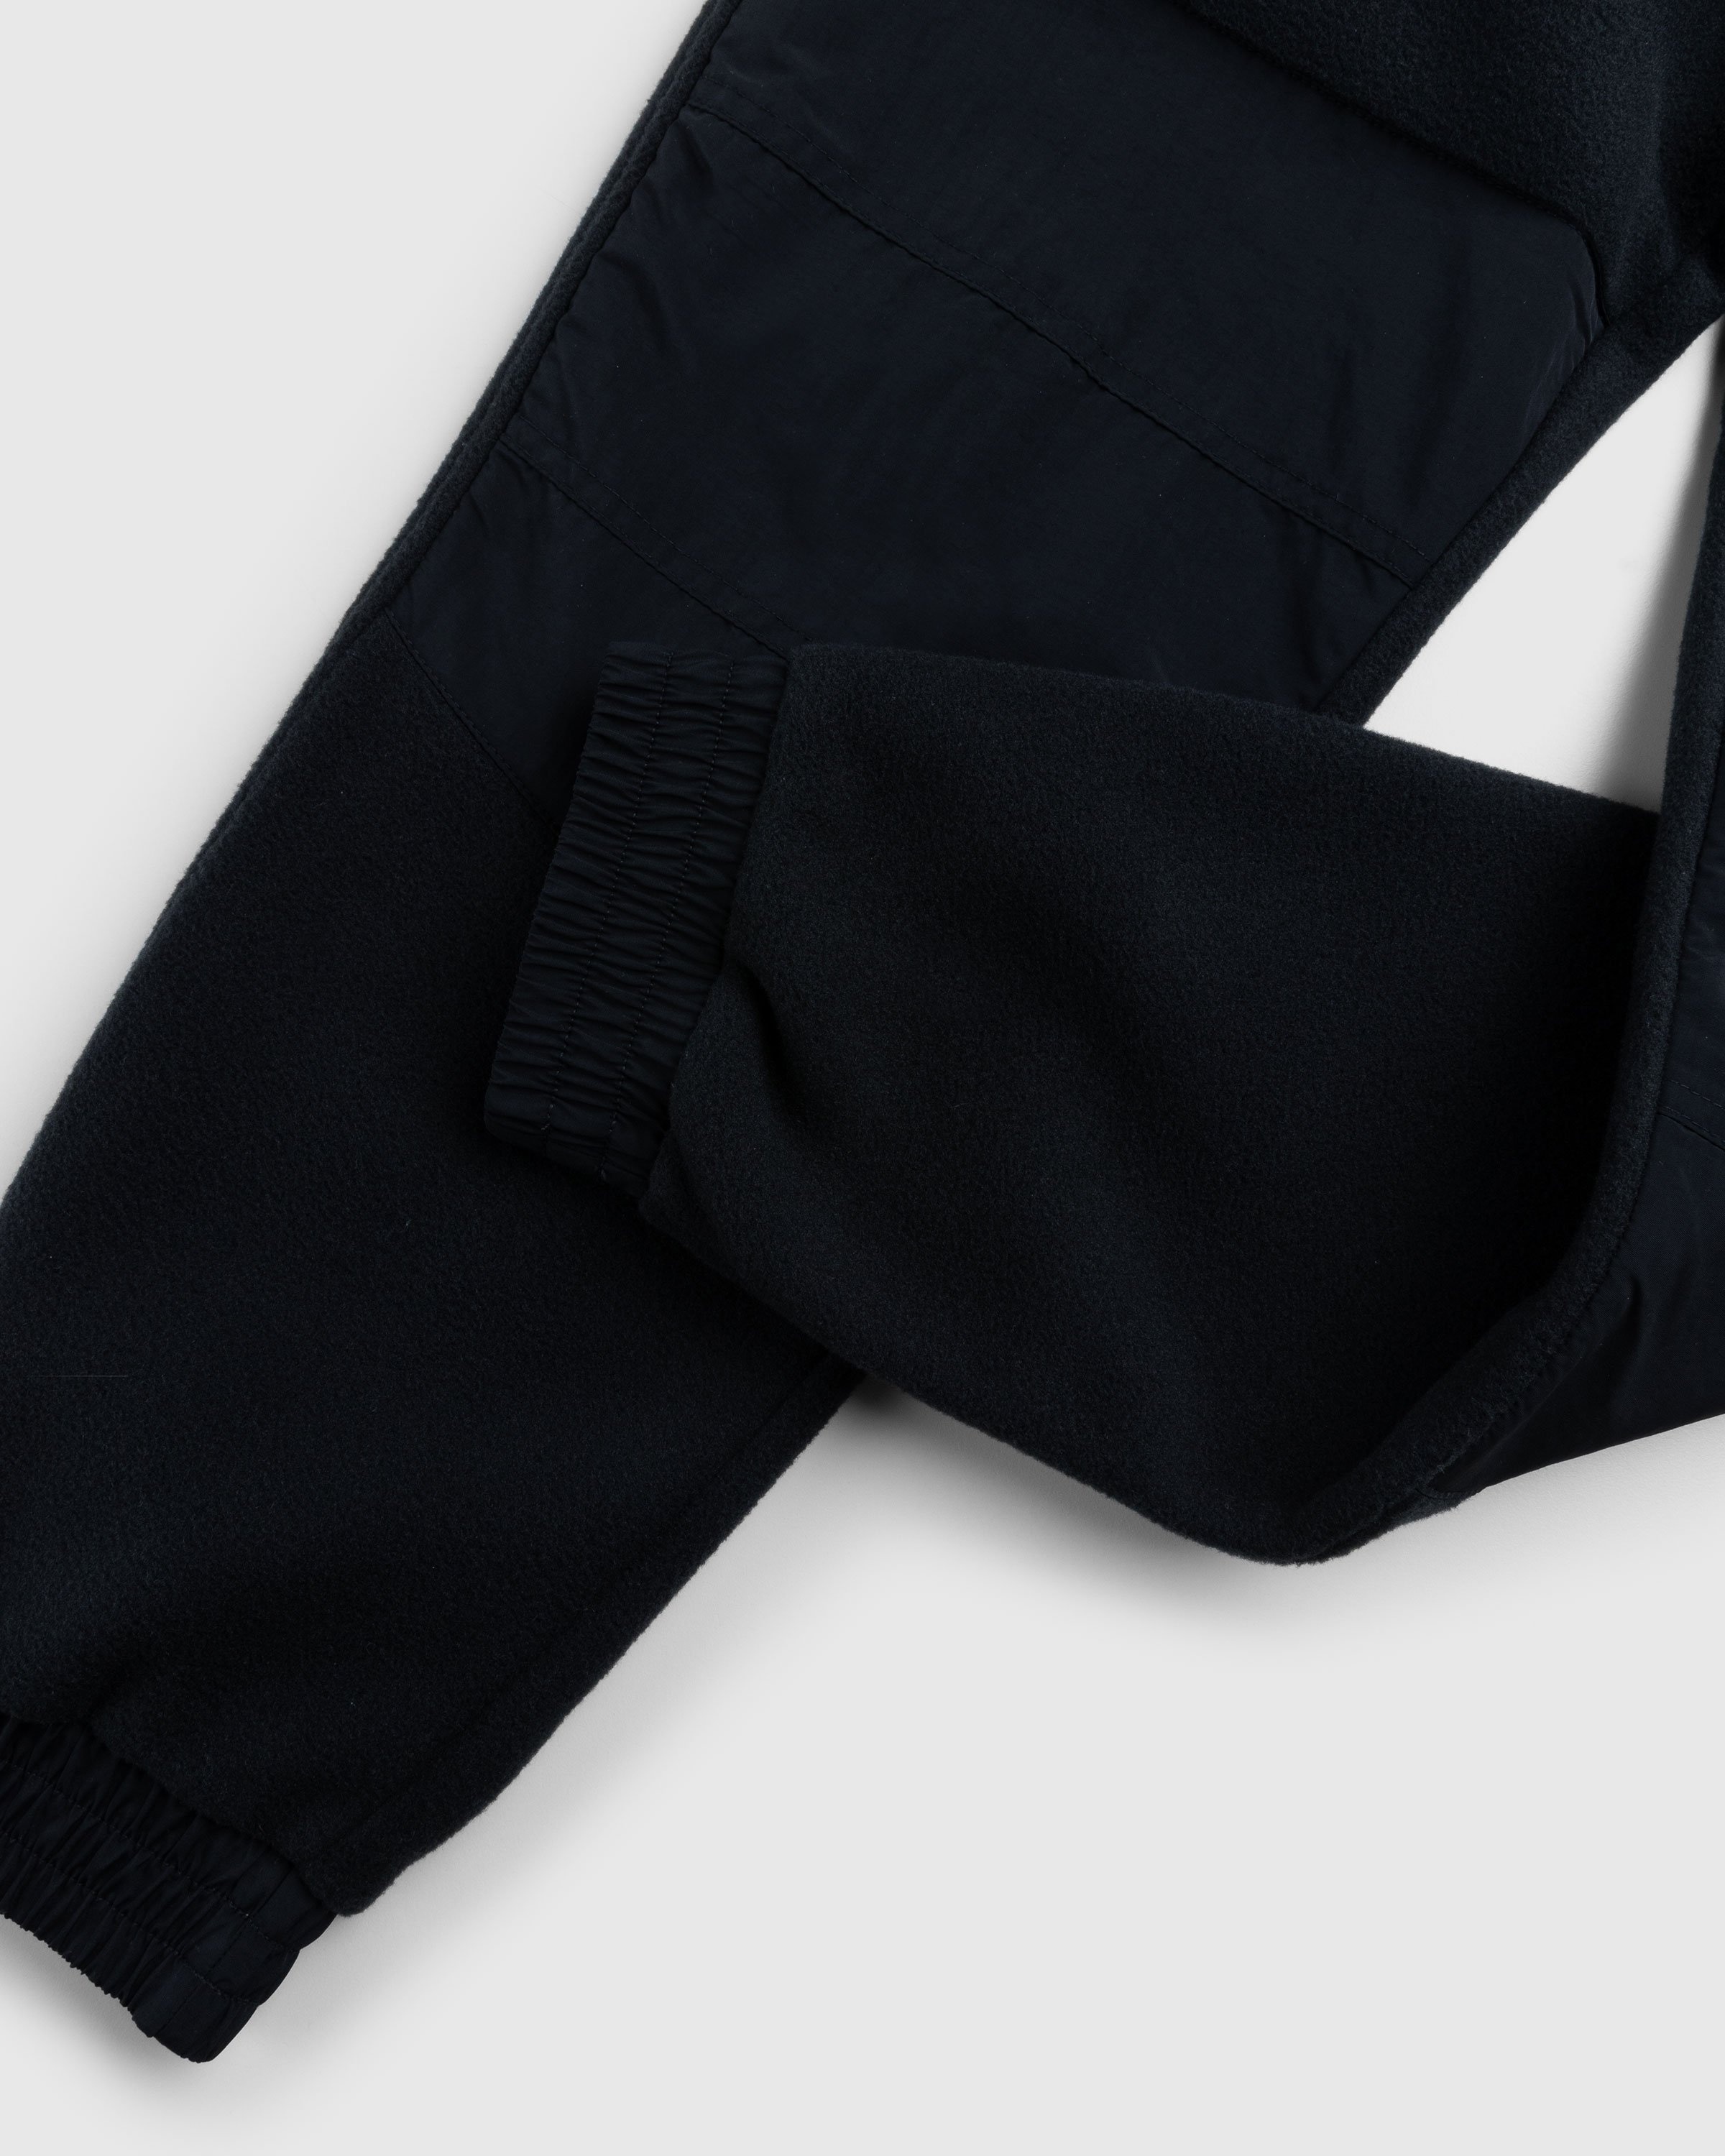 The North Face – Denali Pant Black - Active Pants - Black - Image 5